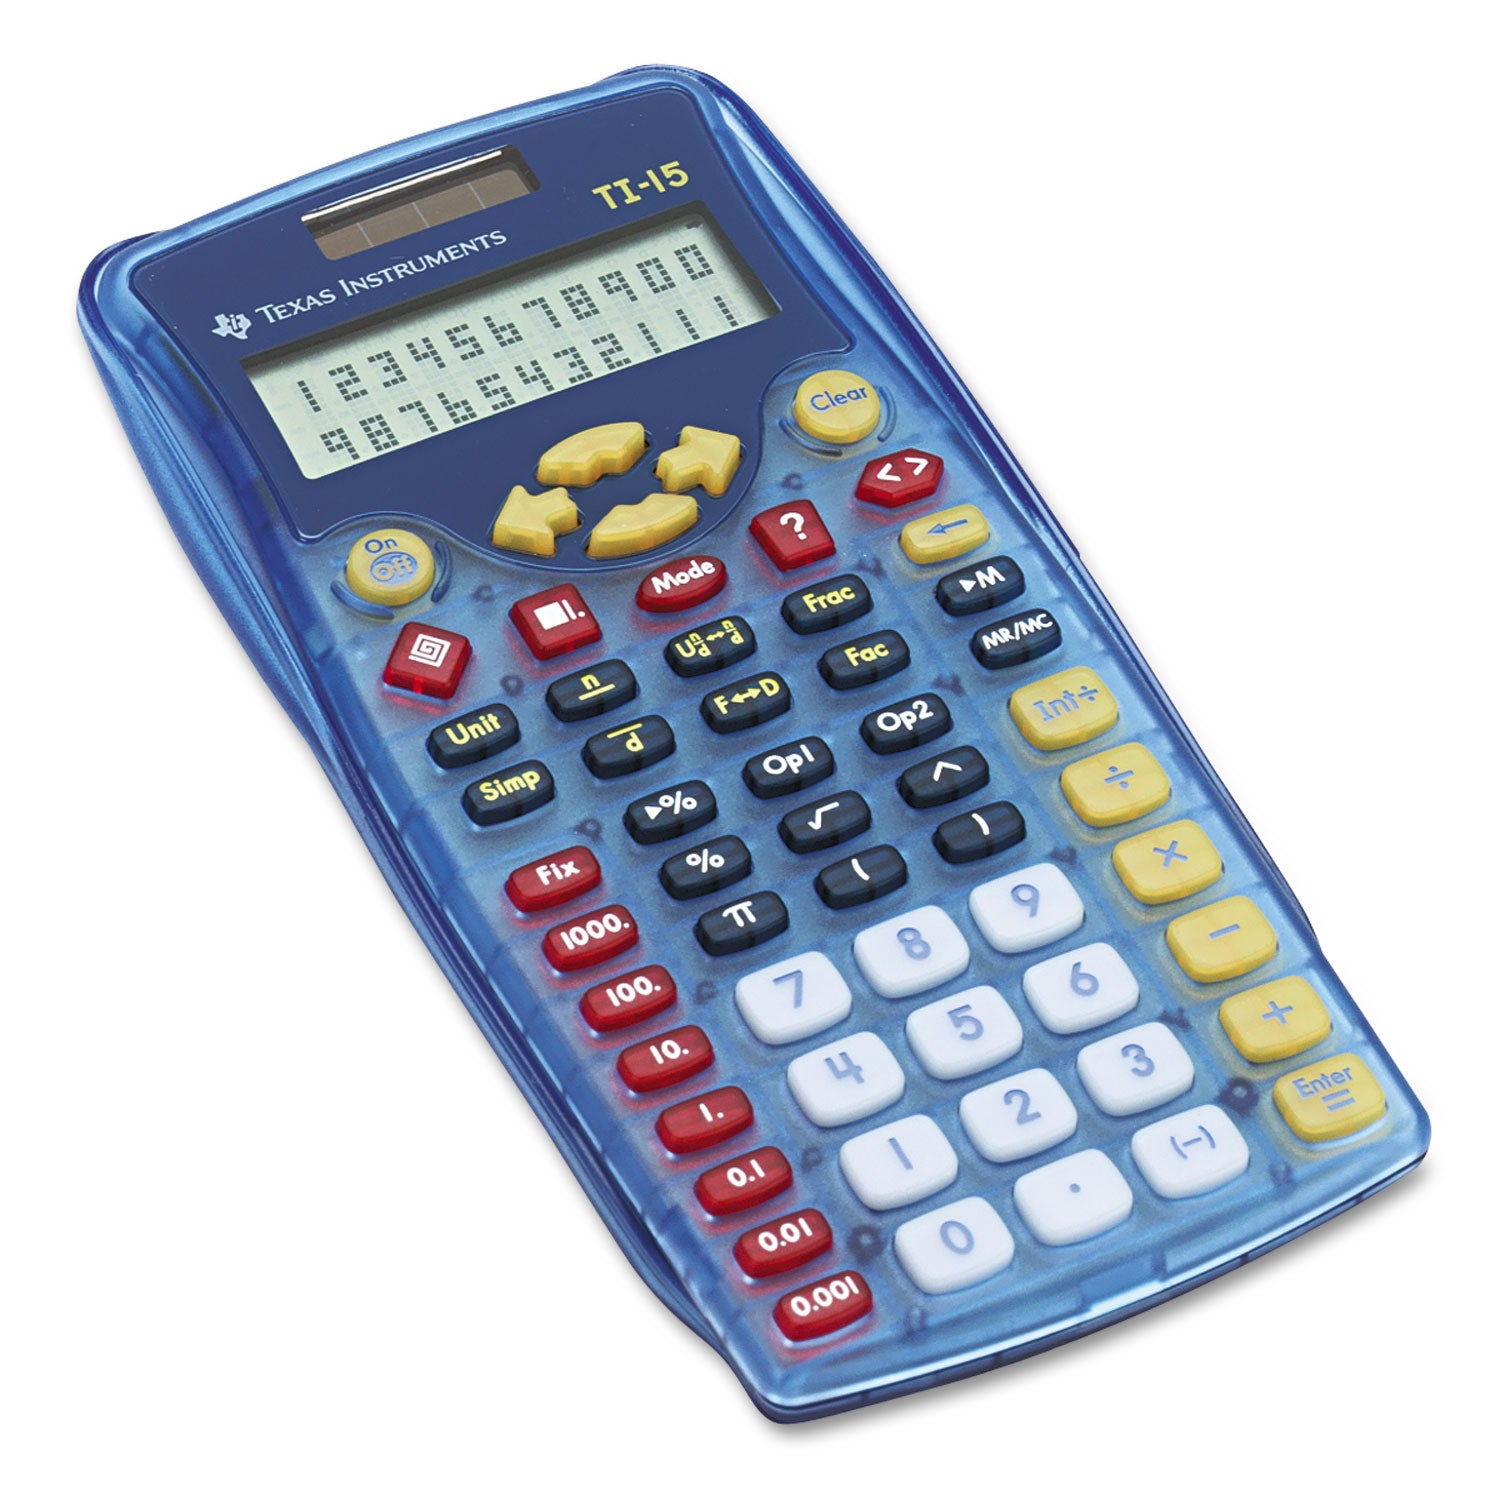 ti-15-explorer-elementary-calculator-11-digit-lcd_texti15rtl - 1